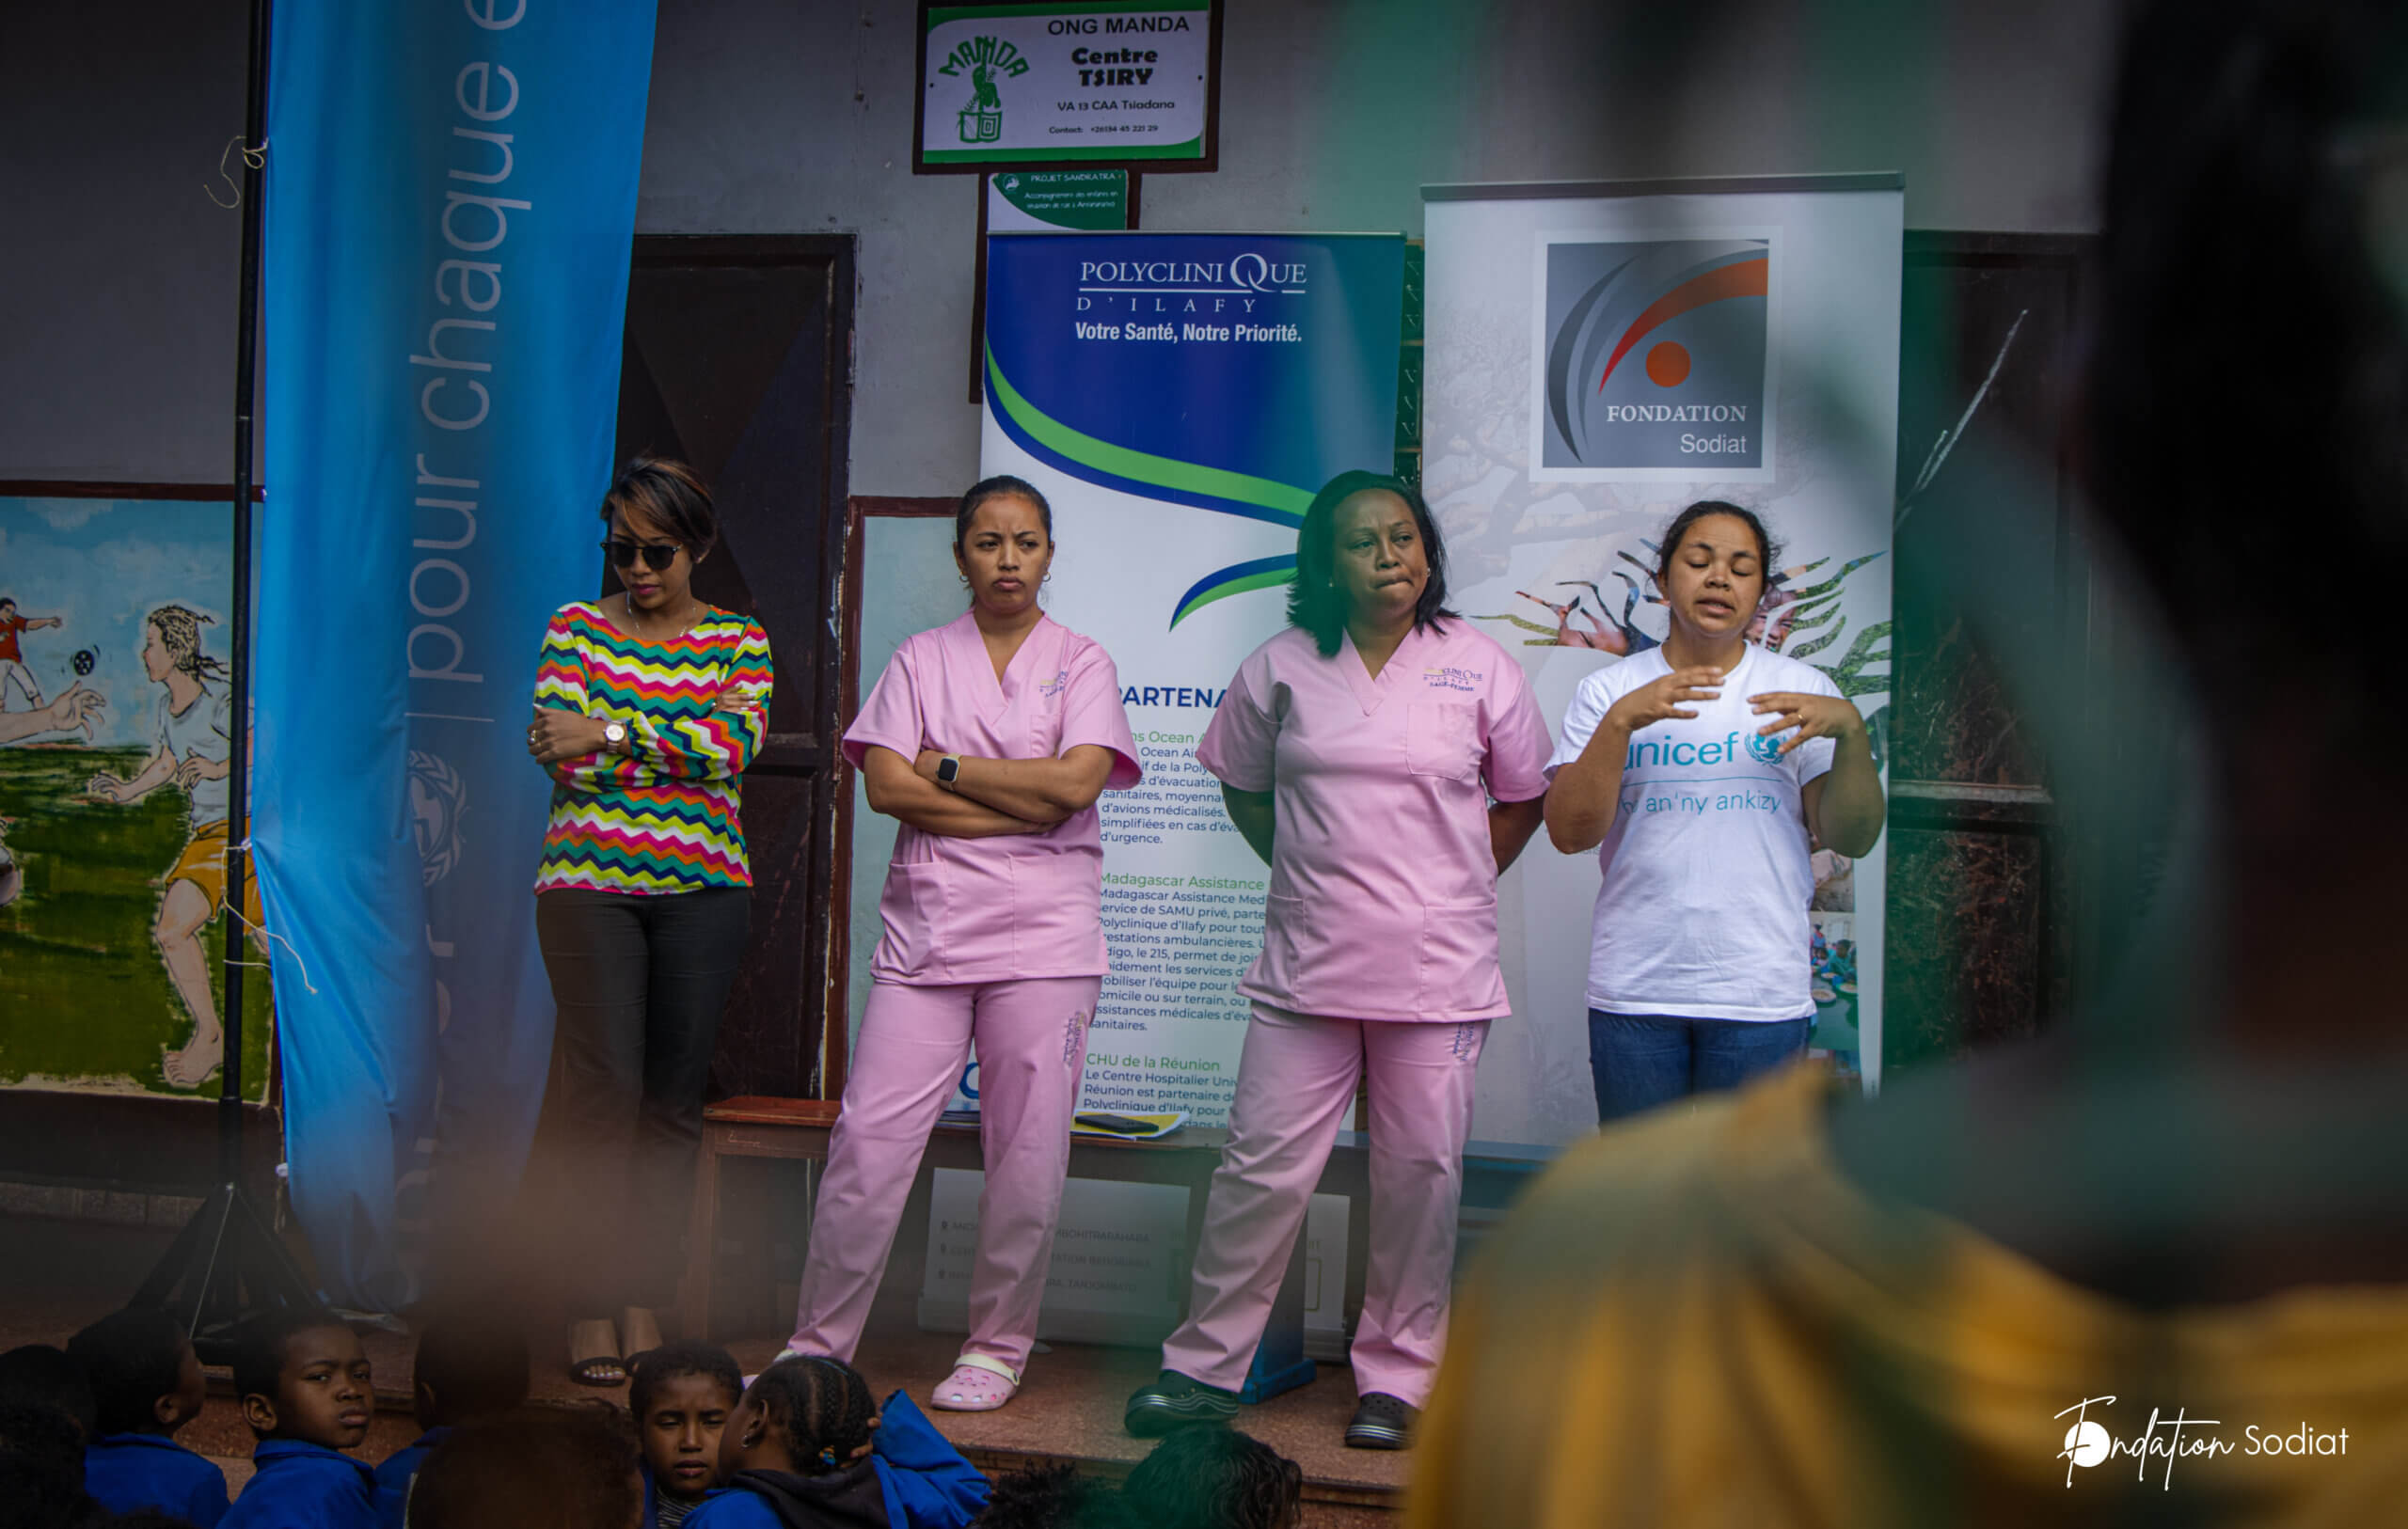 sensibilisation vaccination unicef madagascar fondation sodiat